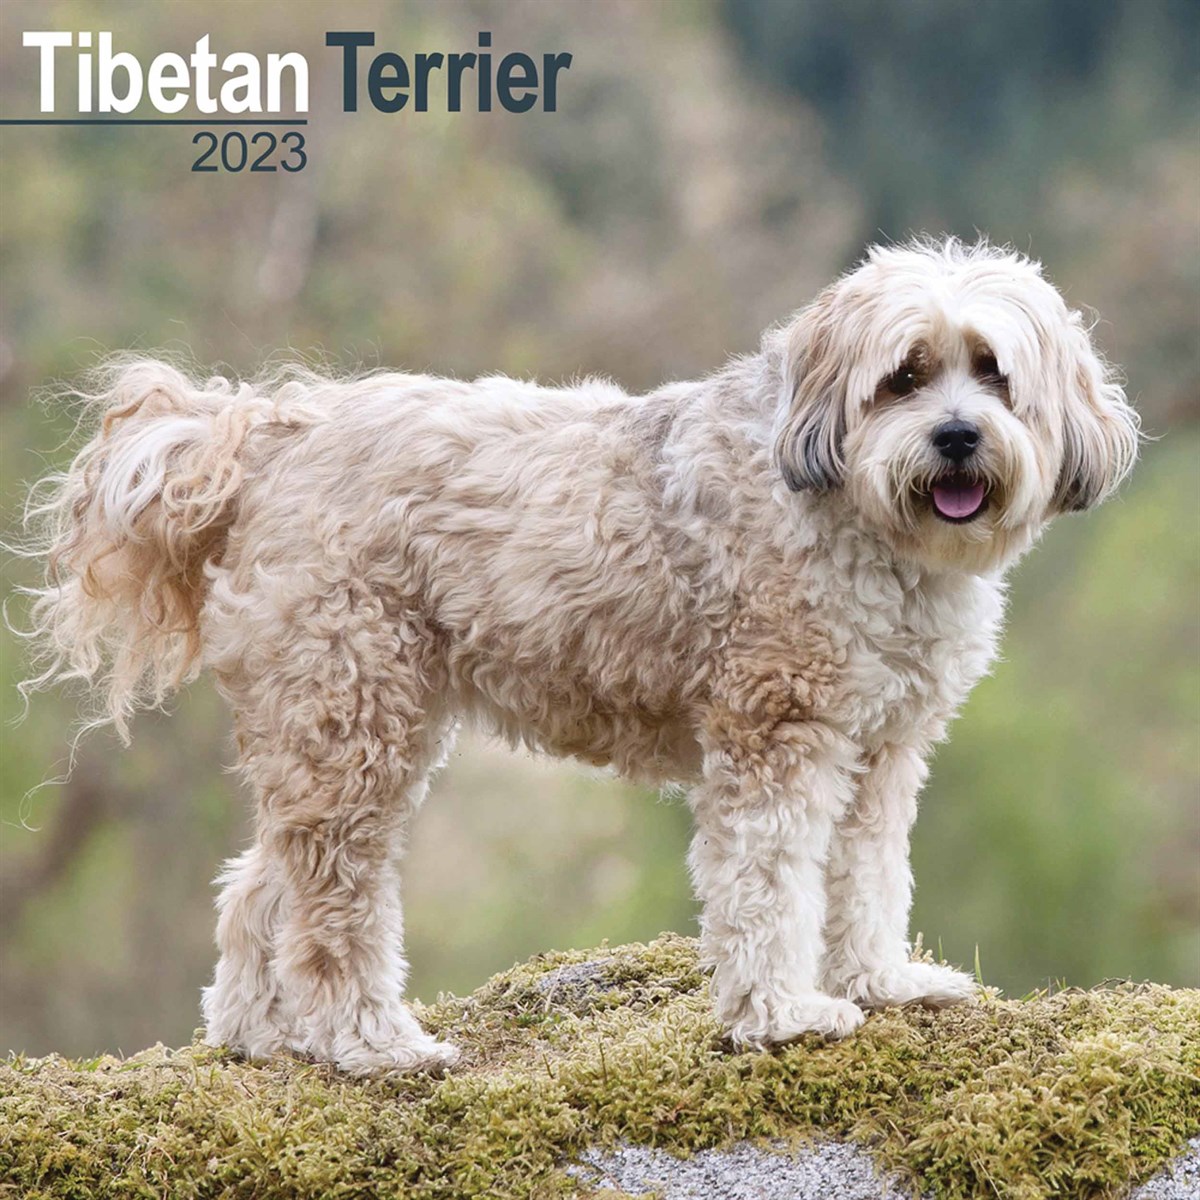 Tibetan Terrier 2023 Calendars